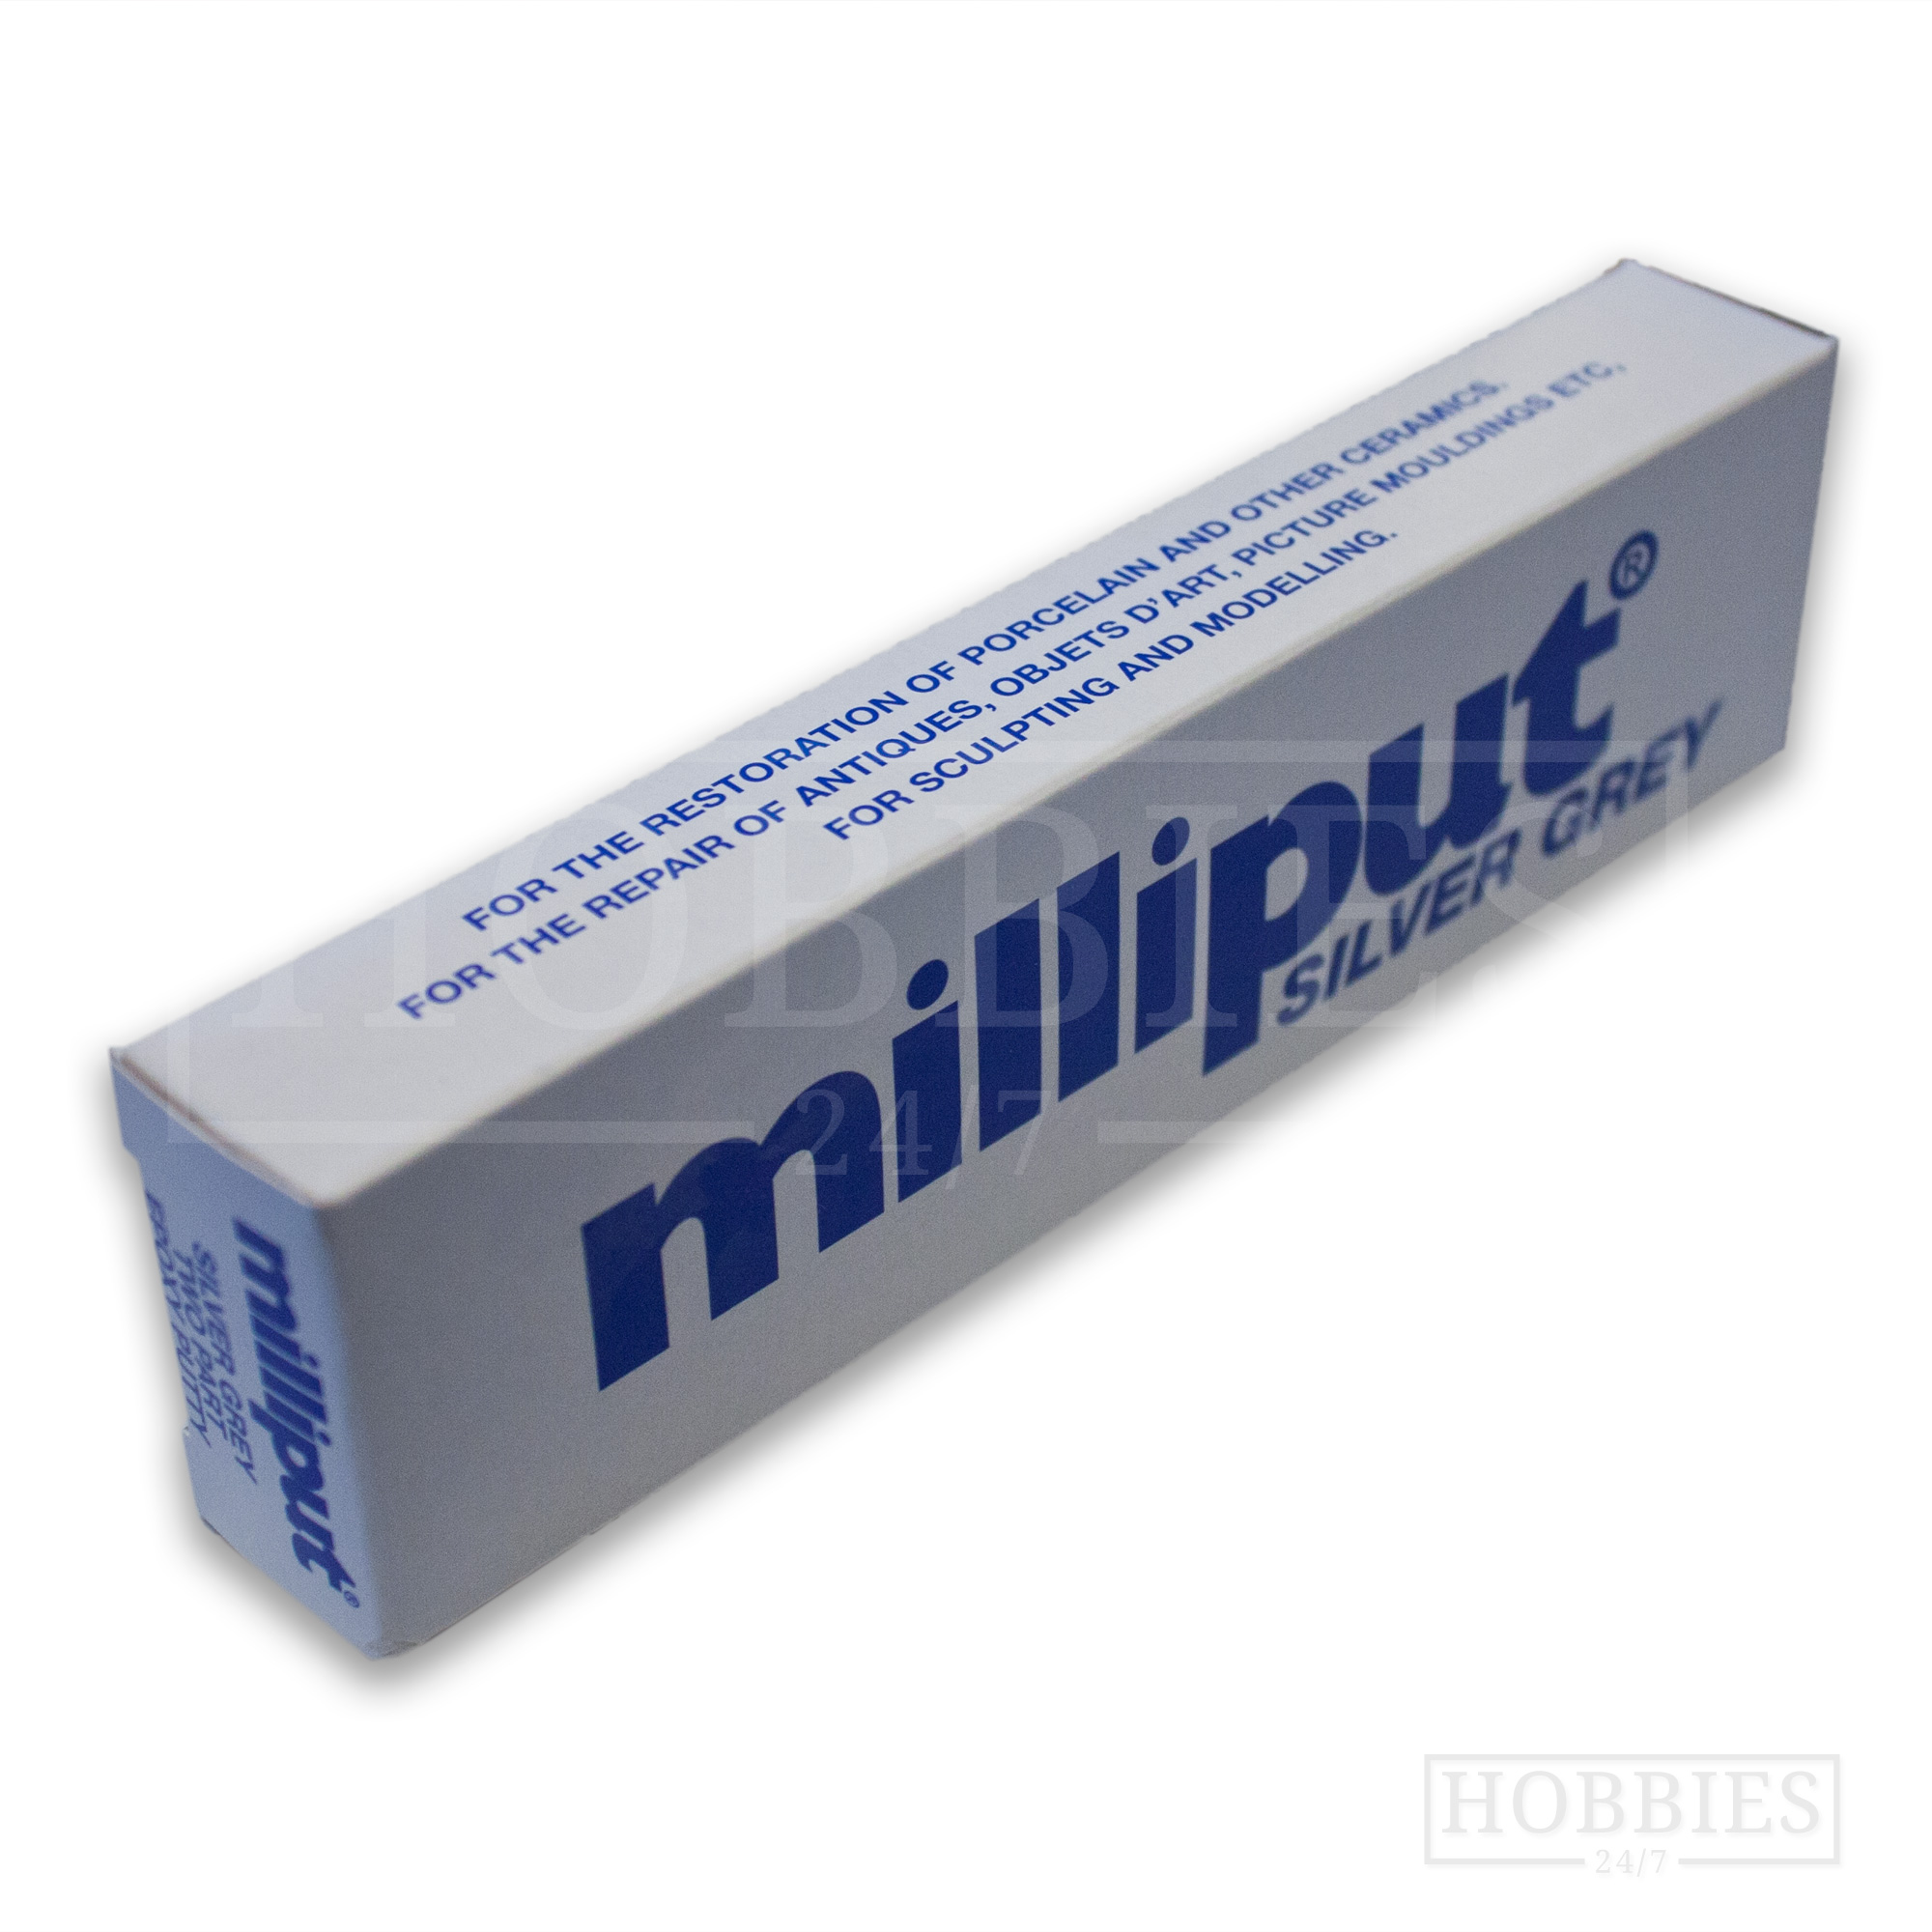 Milliput Silvergrey Colour 2 Part Epoxy Putty 2 Stick 113g New Pack 2nd Post 